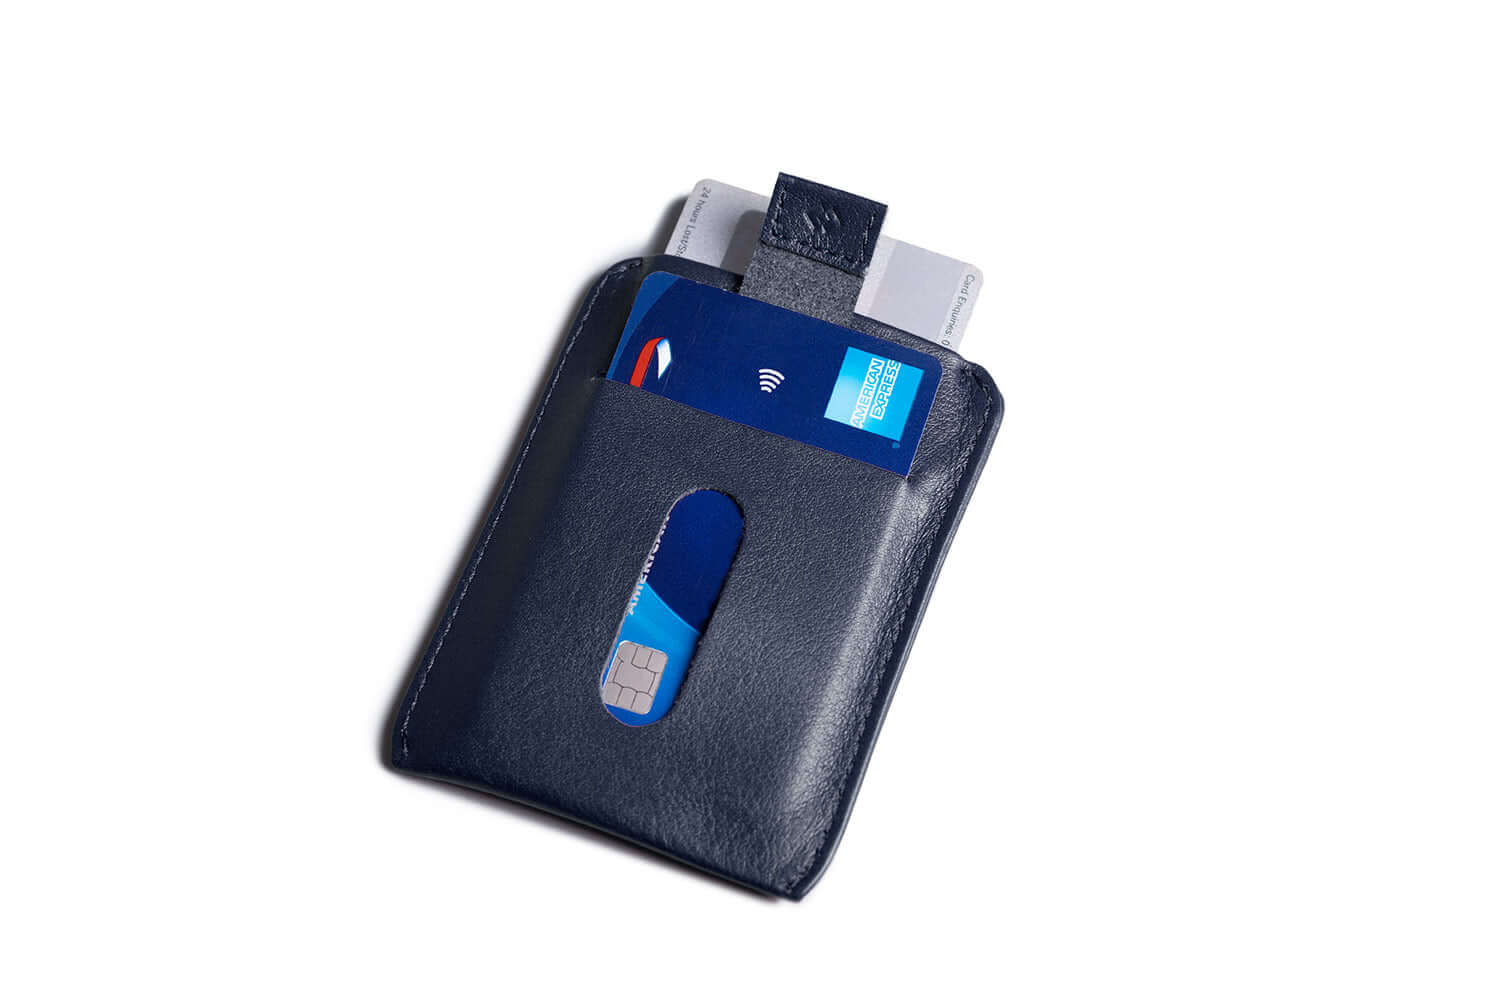 HOUSE OF QUIRK Slim Metal RFID Card Wallet with